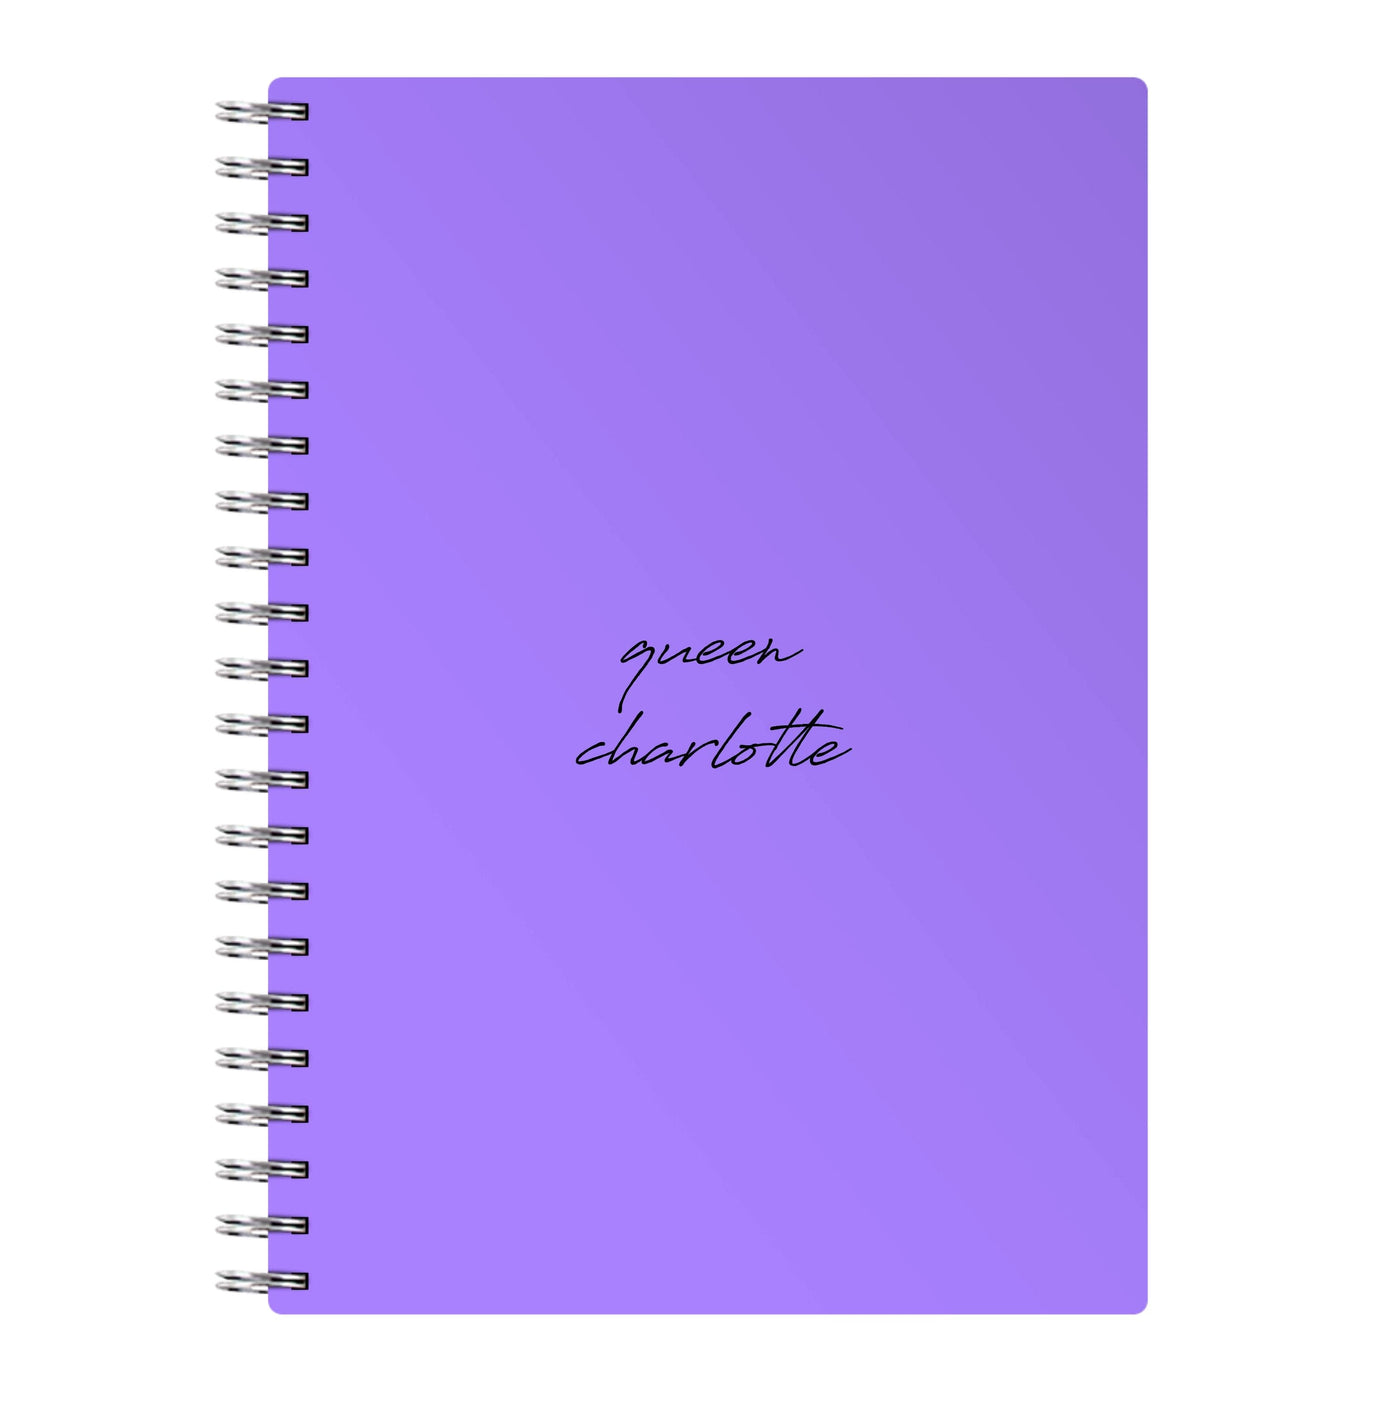 Announce - Queen Charlotte Notebook